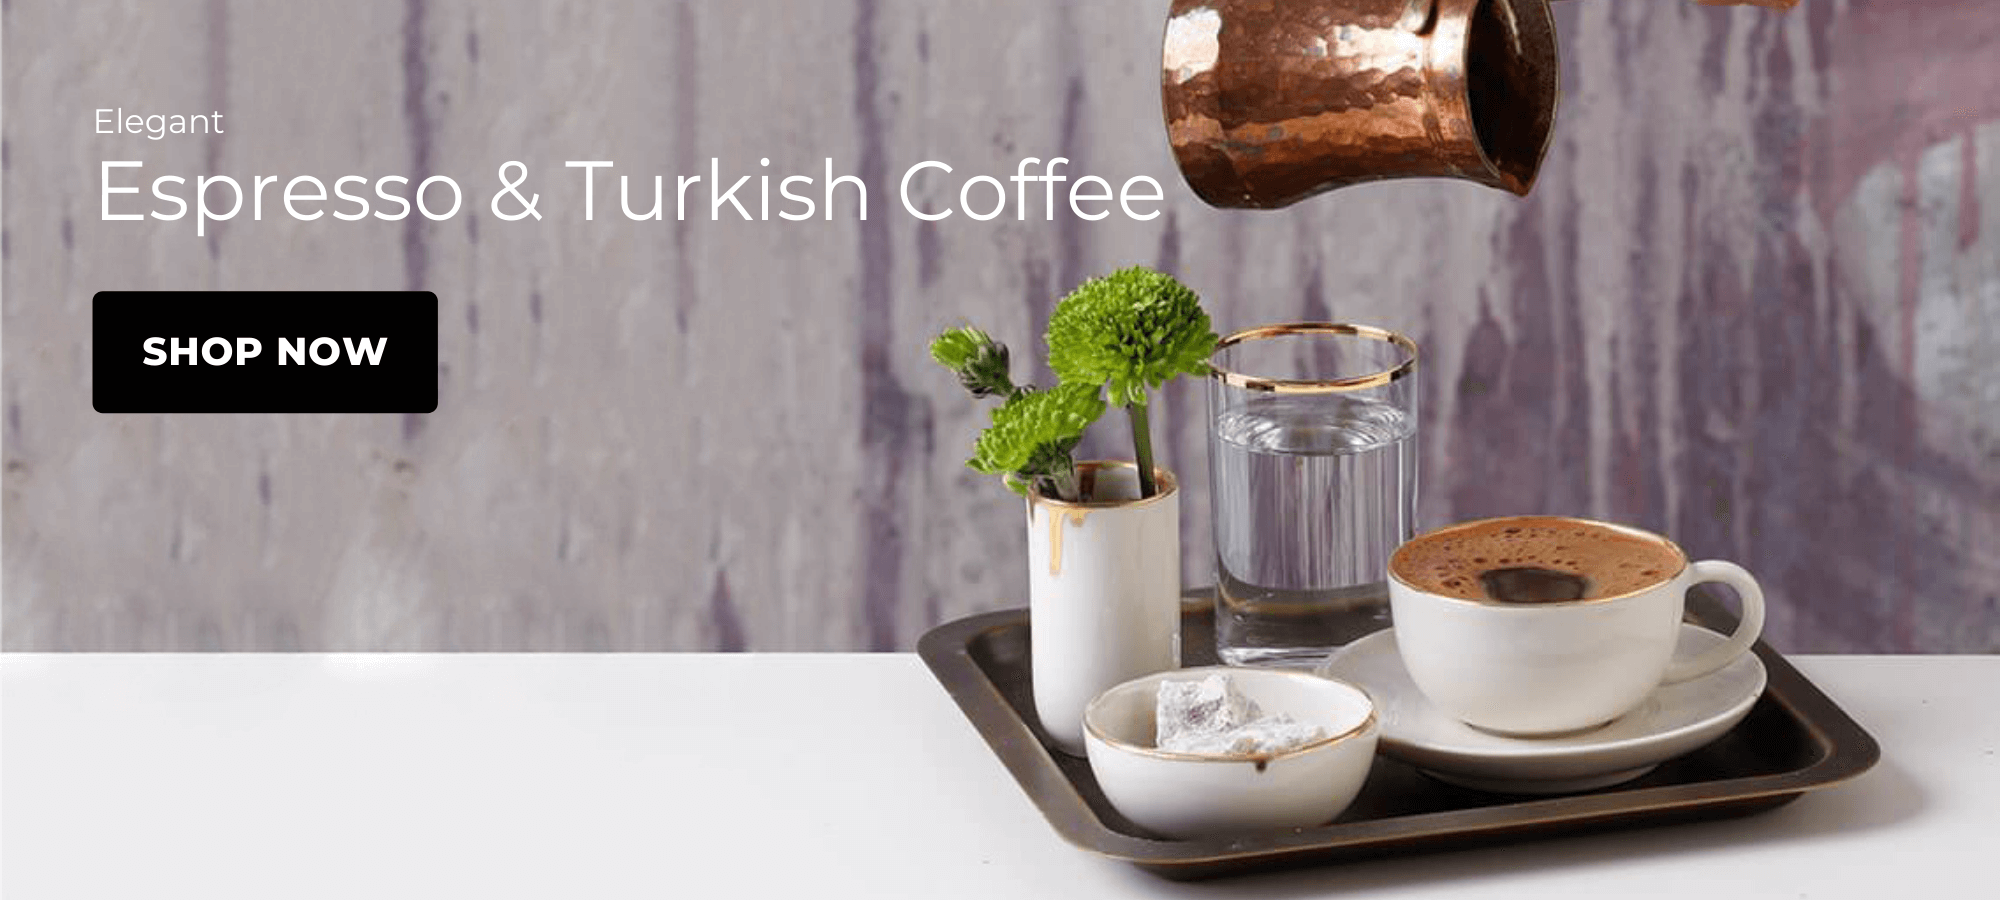 Espresso & Turkish Coffee